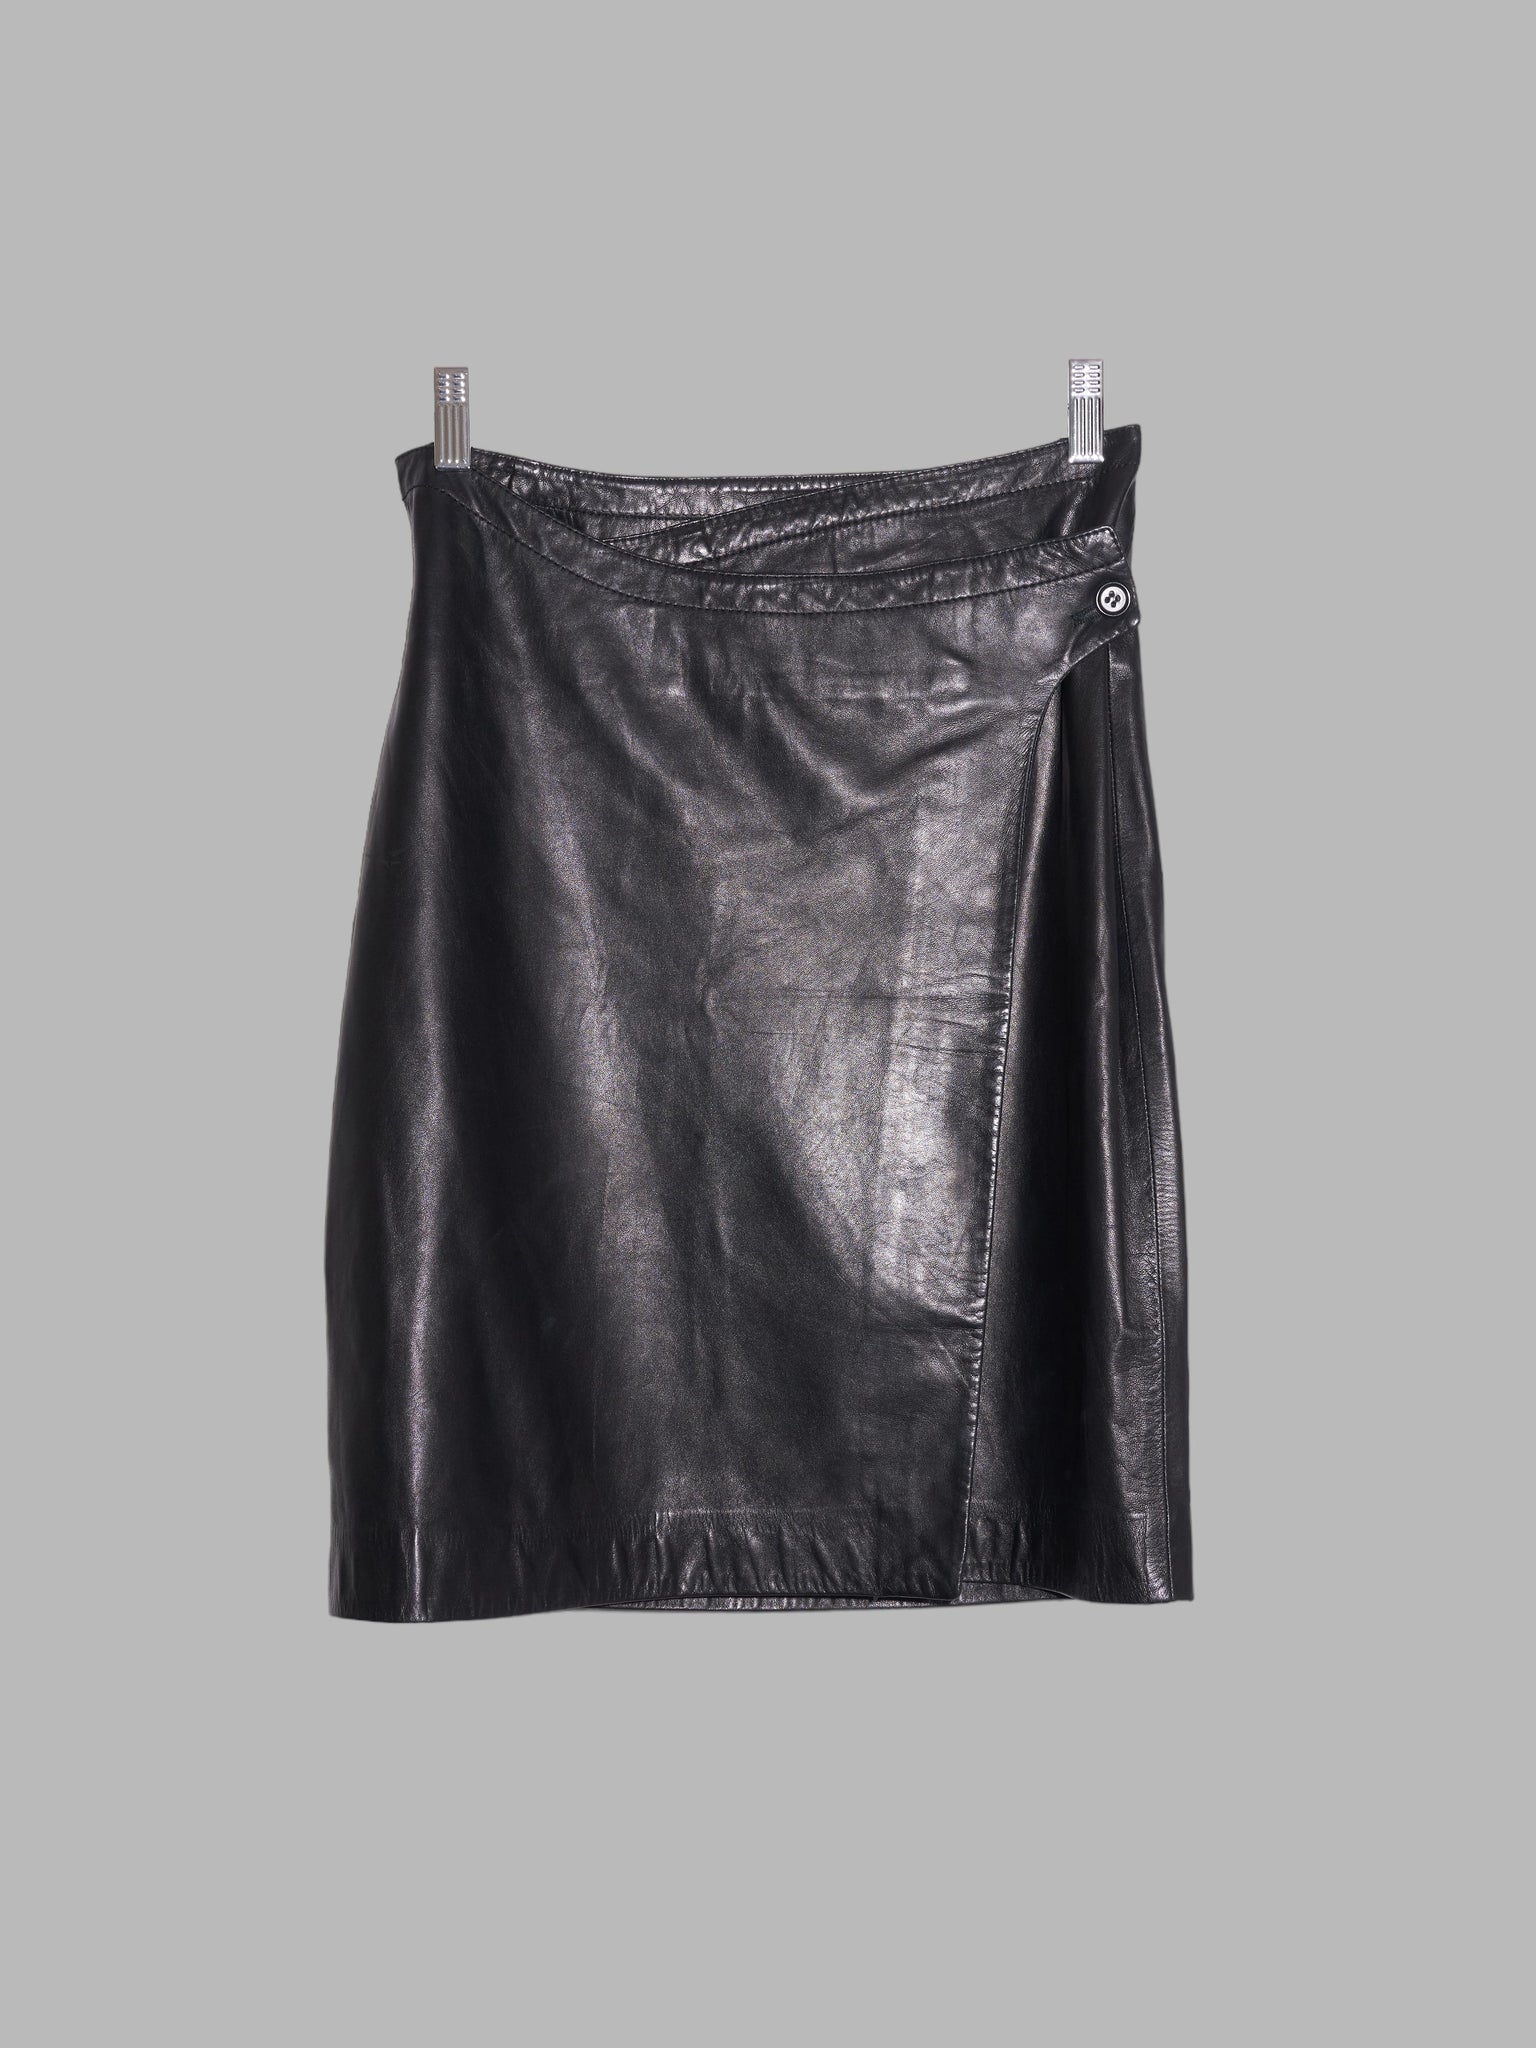 Dirk Bikkembergs 1990s 2000s black leather wrap skirt - size 42